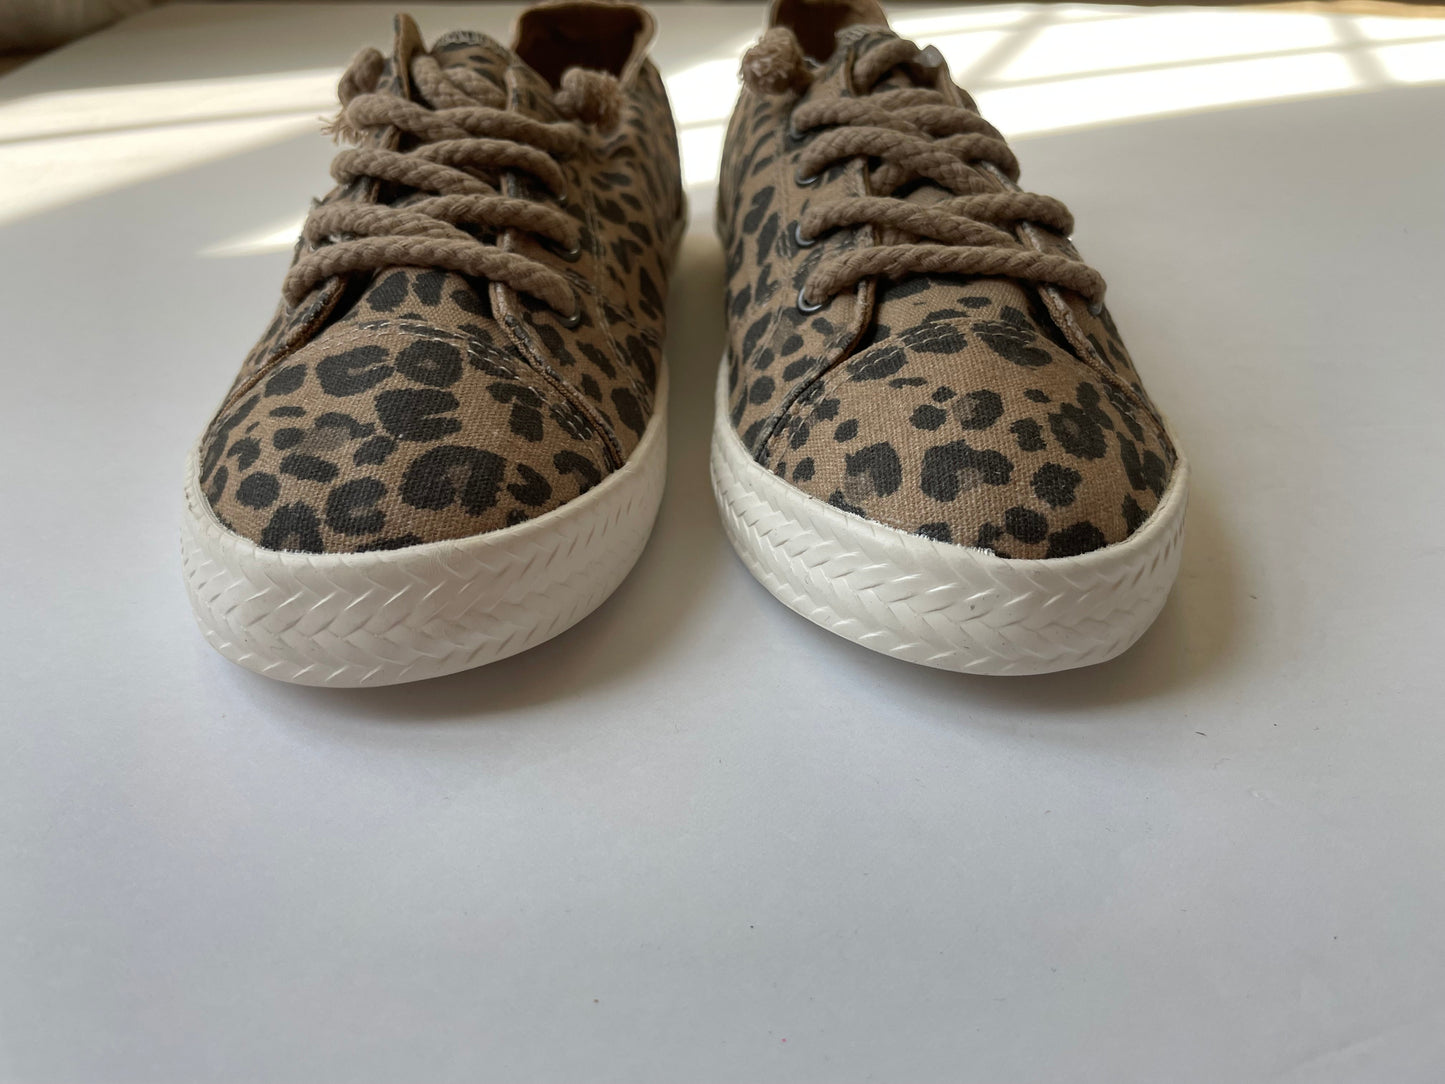 Animal Print Shoes Flats Billabong, Size 7